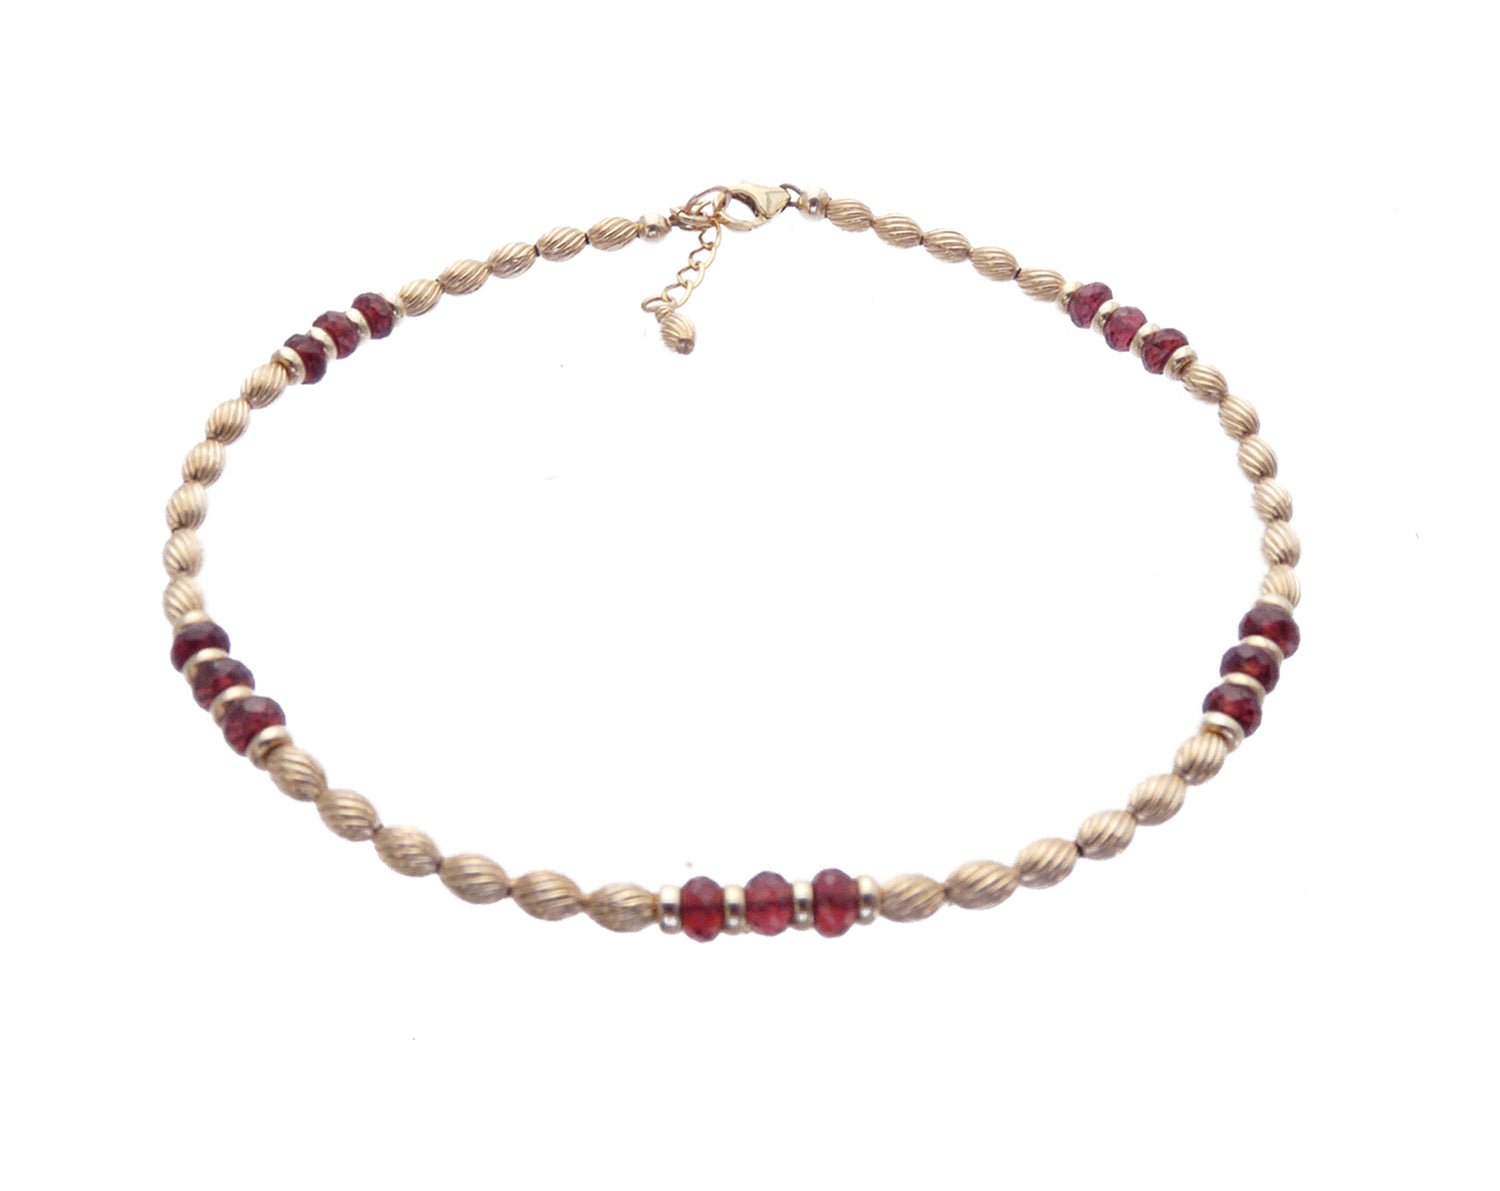 Garnet Bracelet, Gemstone Bead Bracelets for Women, Red Garnet Jewelry, January Birthstone, Birthday Gifts for Her in Gold &amp; Sterling Silver